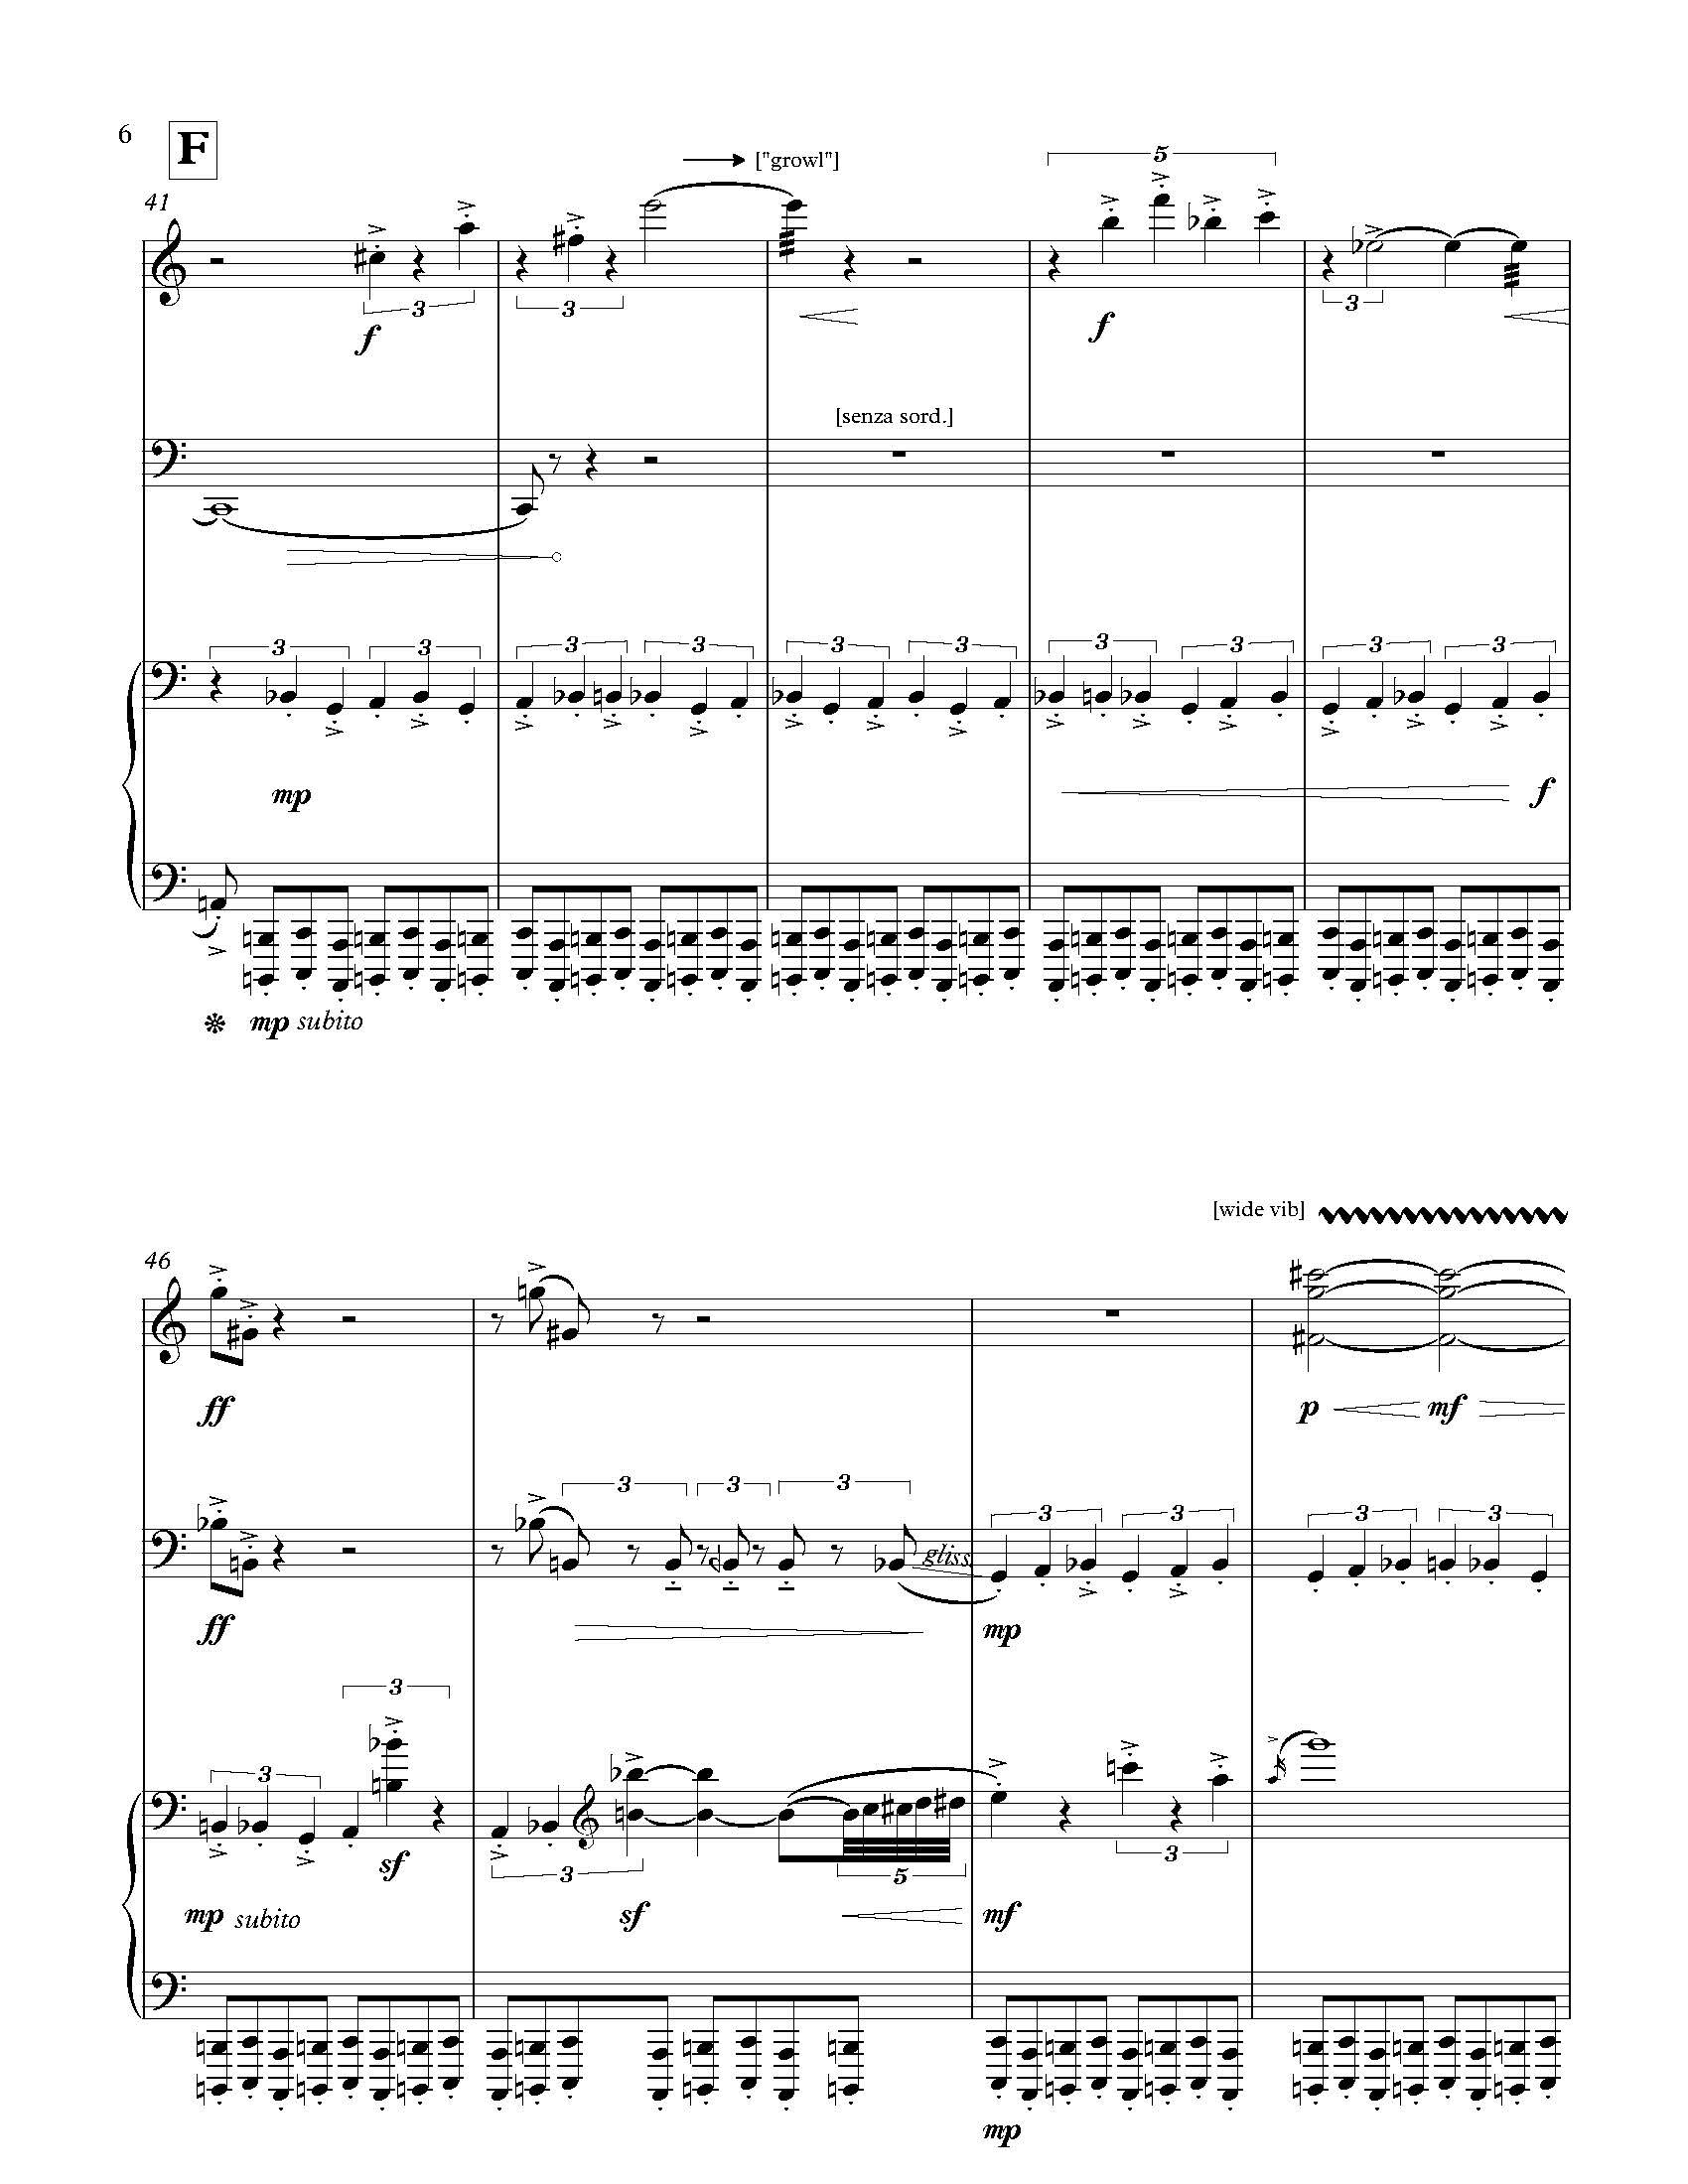 alice + zoltan 4ever - Complete Score_Page_12.jpg